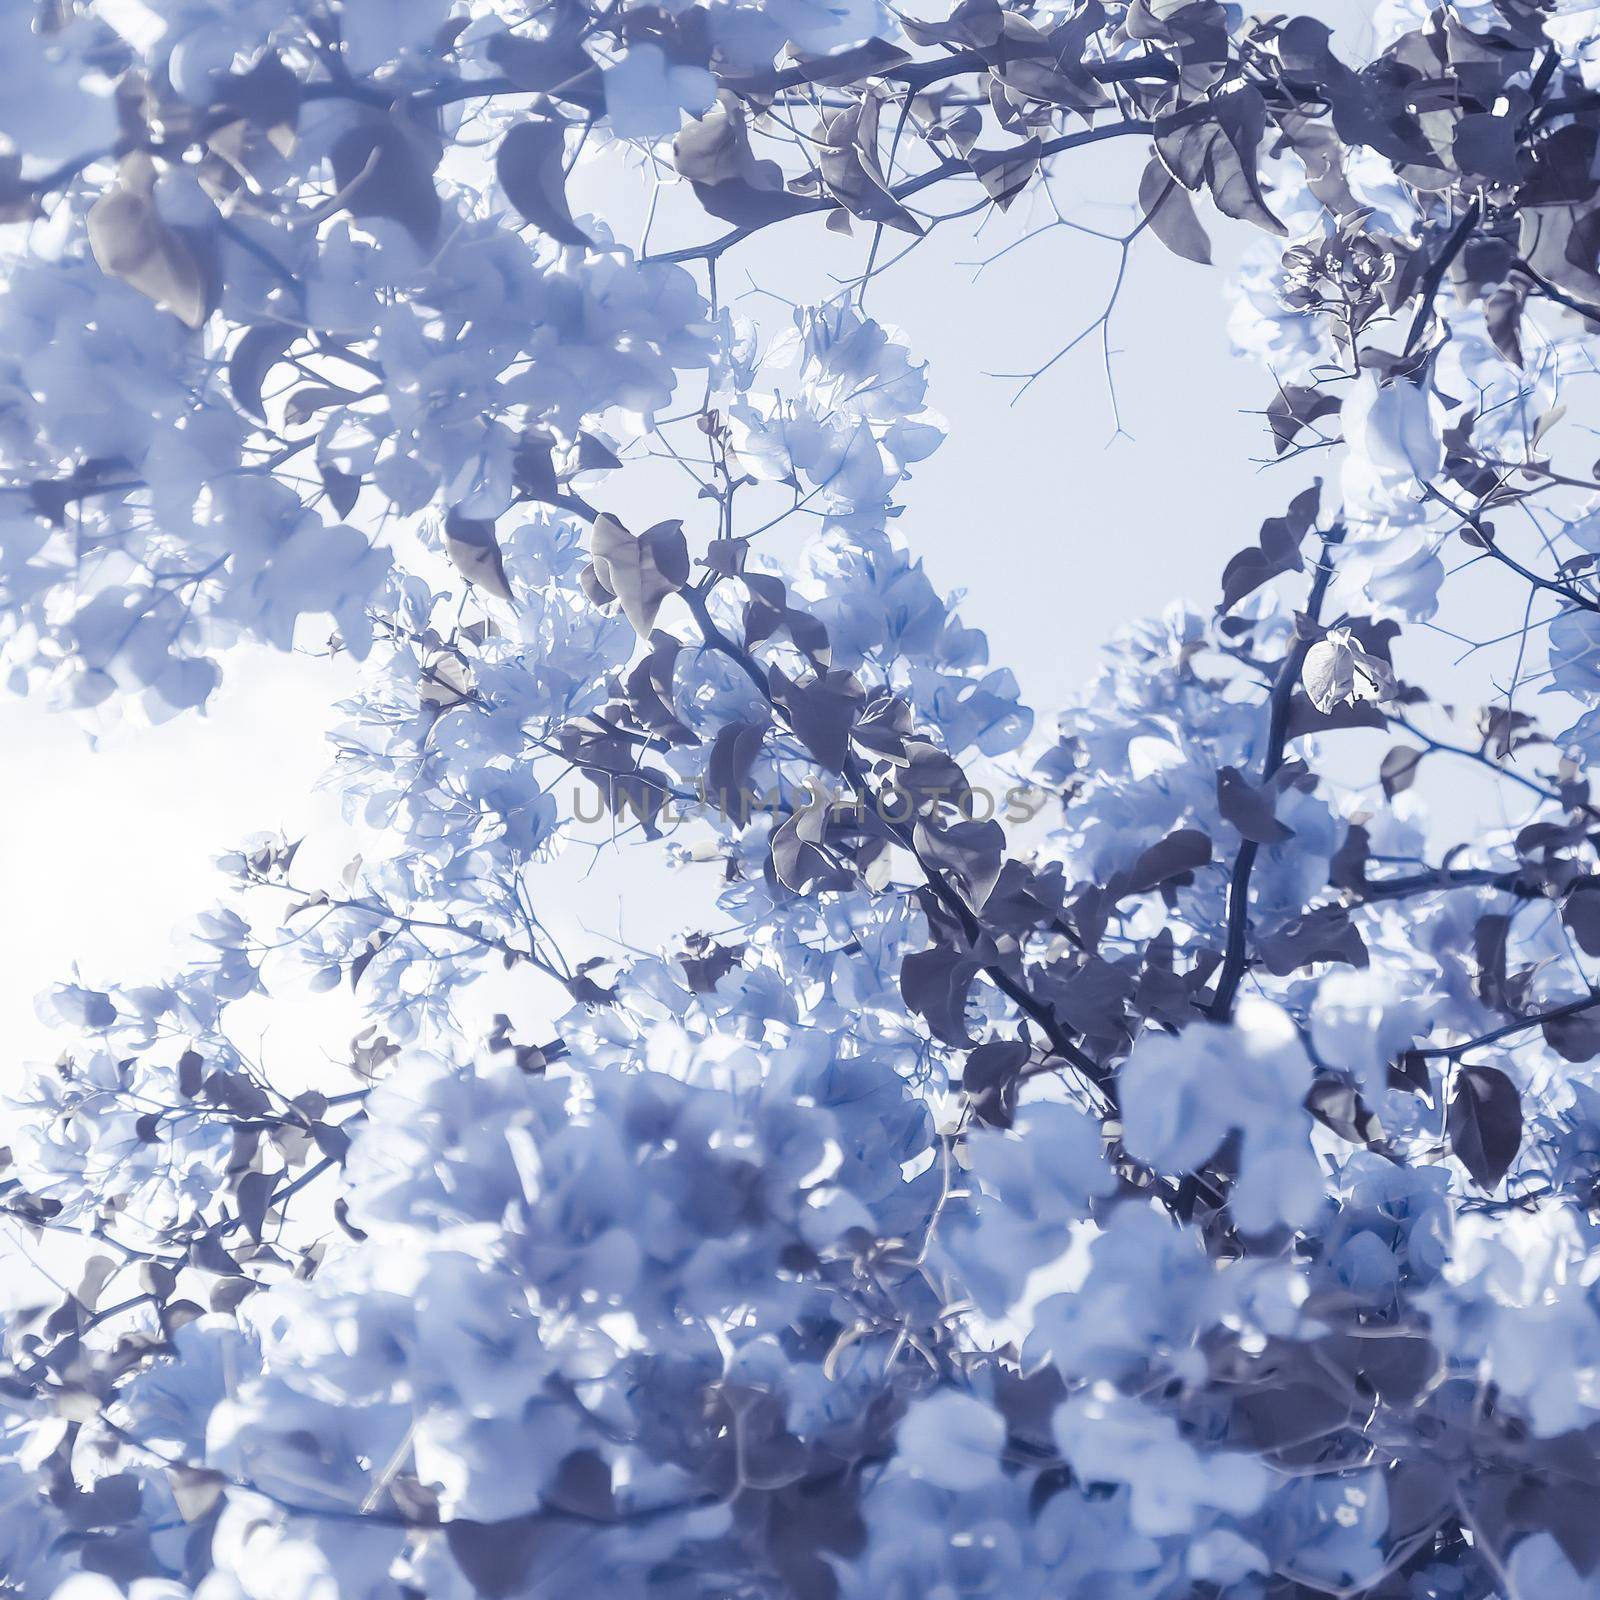 Blue floral composition by Anneleven